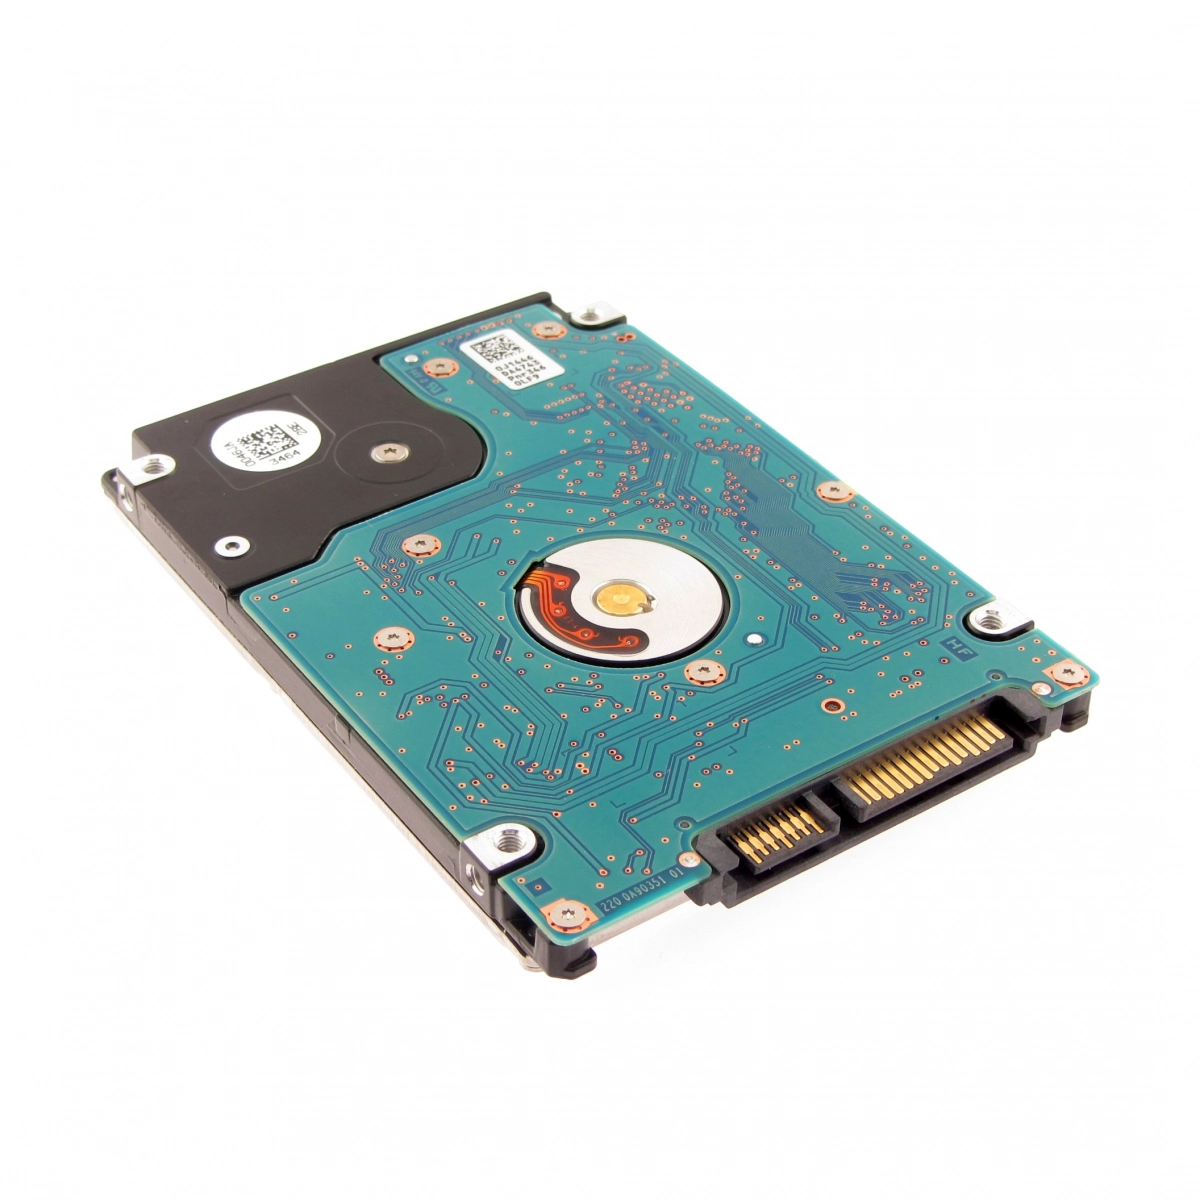 Notebook-Festplatte 500GB, 5400rpm, 16MB für MEDION Akoya E6412T MD99450